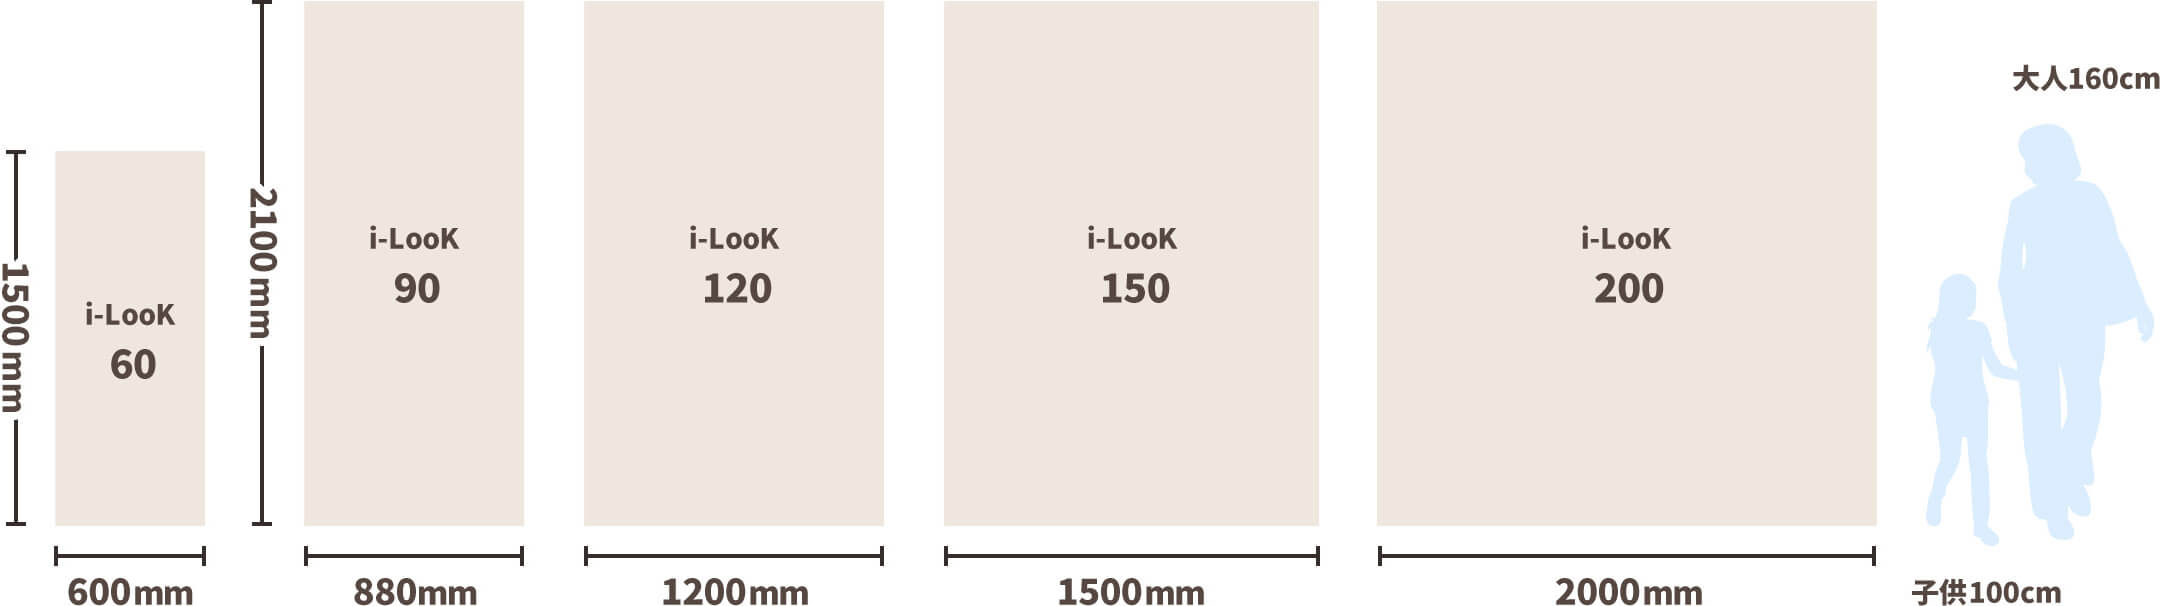 i-Lookシリーズ アイルックシリーズの最大有効表示サイズ　i-LooK60：W600mm×H1500mm,i-LooK90：W880mm×H2100mm,i-LooK120：W1200mm×H2100mm,i-LooK150：W1500mm×H2100mm,i-LooK200：W2000mm×H2100mm